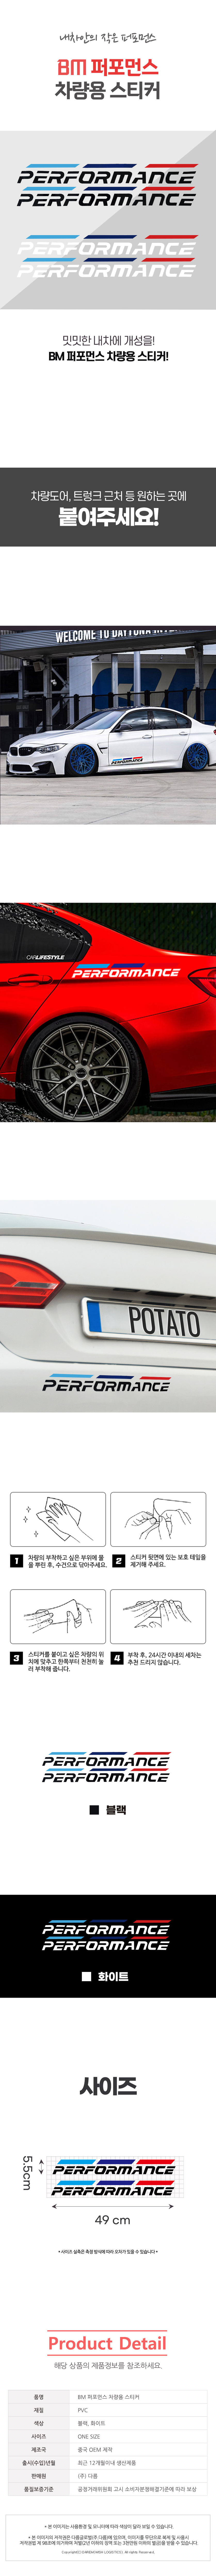 performance_vehicle_sticker_detail.jpg